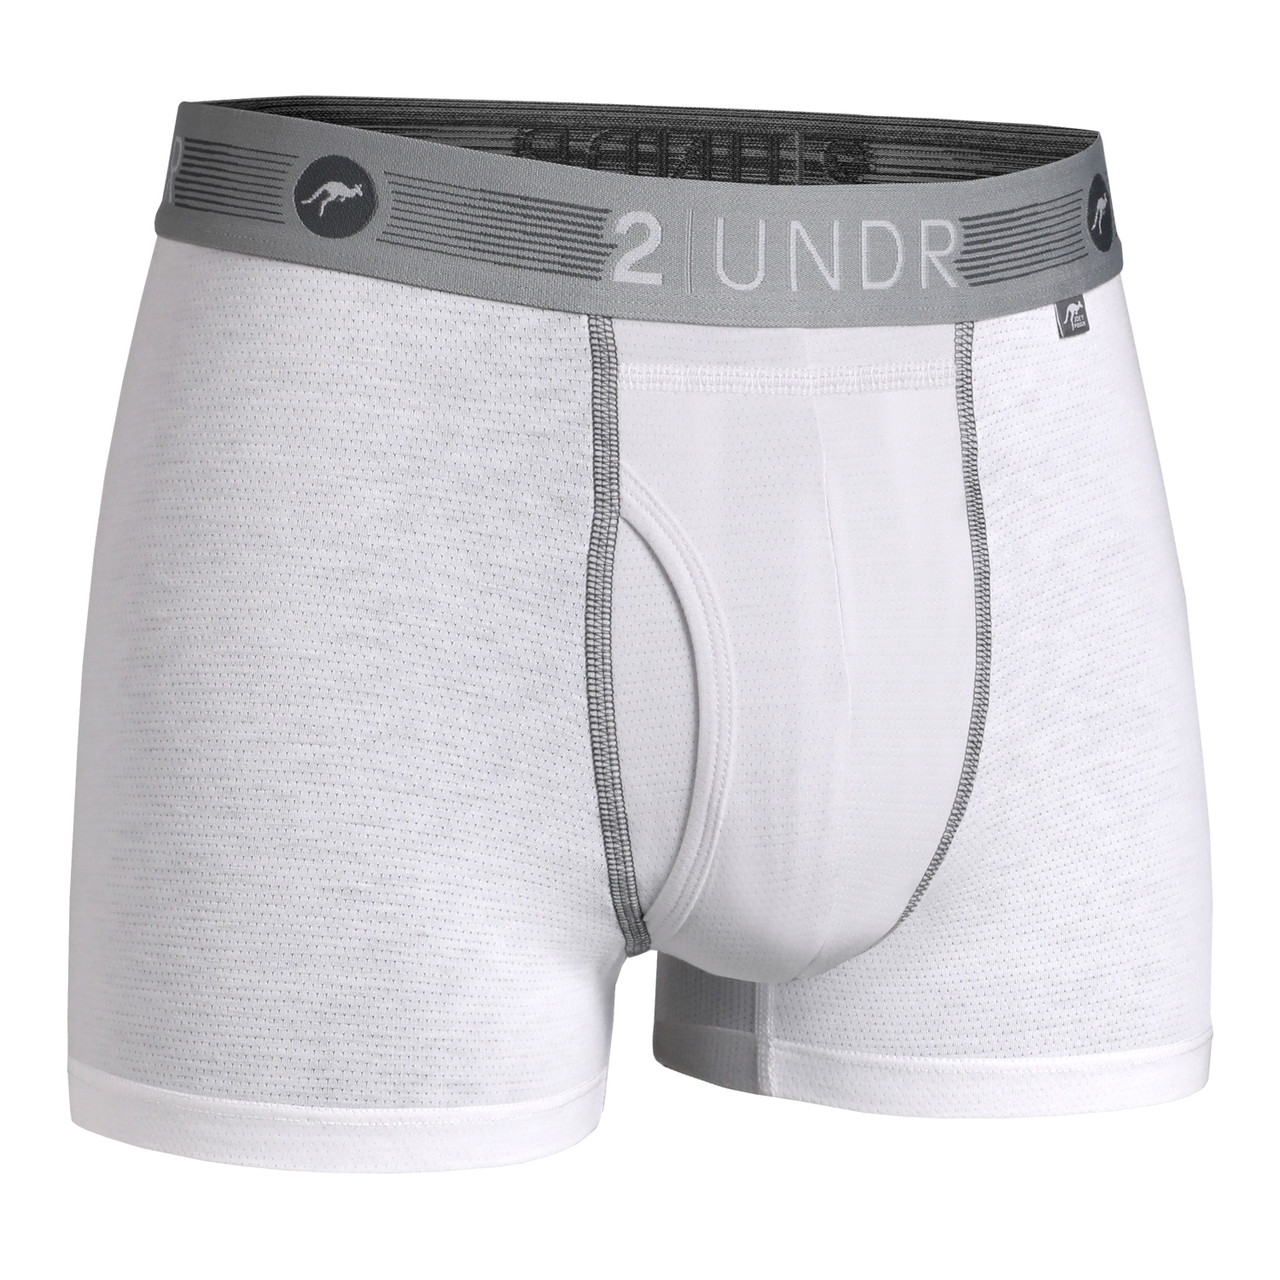 RIO Mens Hipster Trunks 2-Pack MY7G2W Multi Mens Underwear